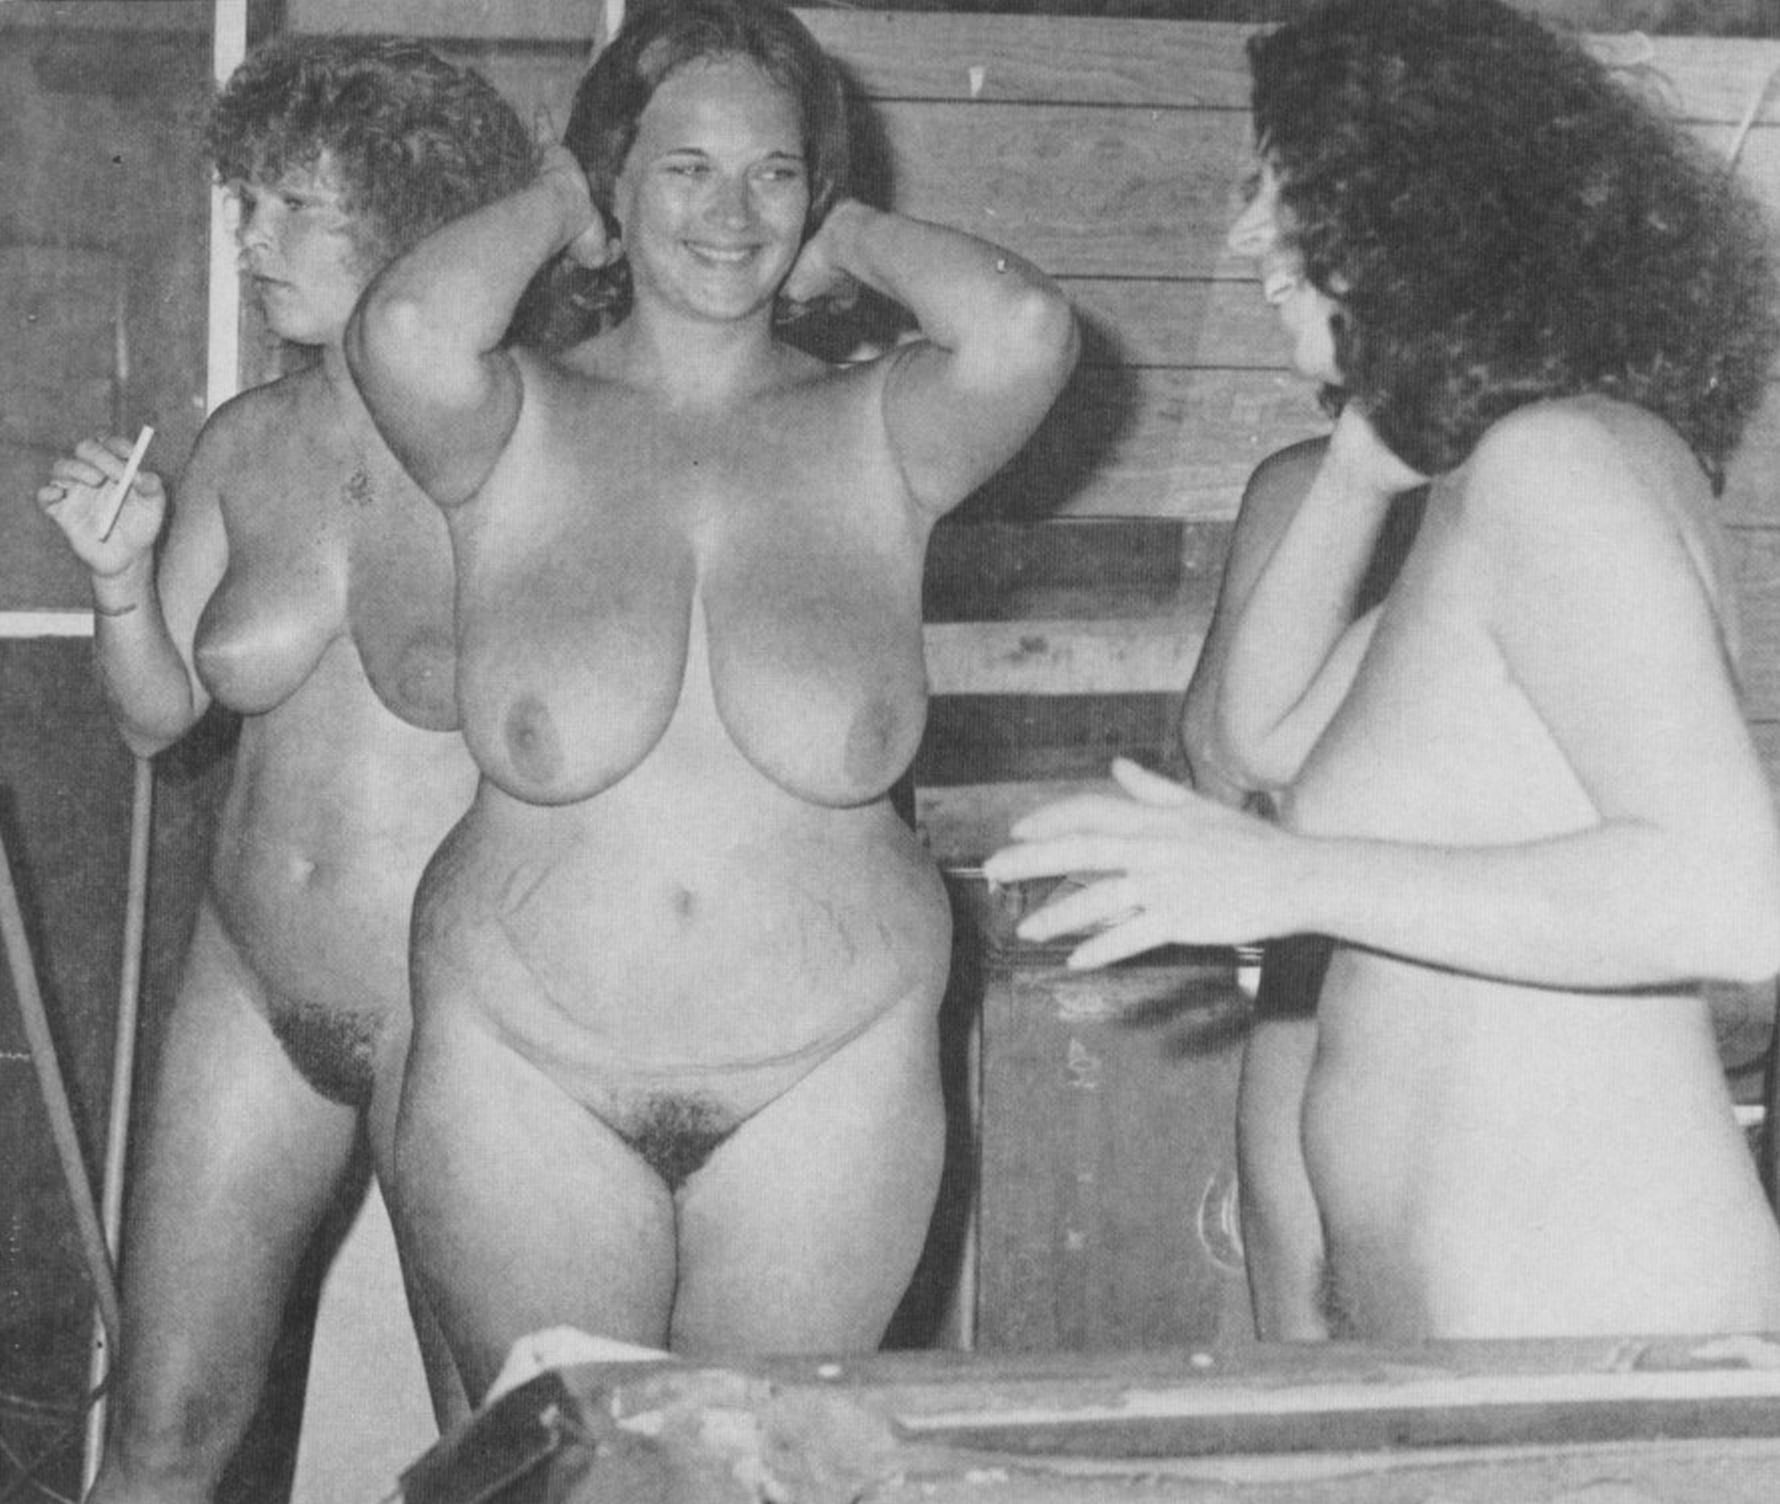 Hairy pretty women on retro porn pics 7! - N